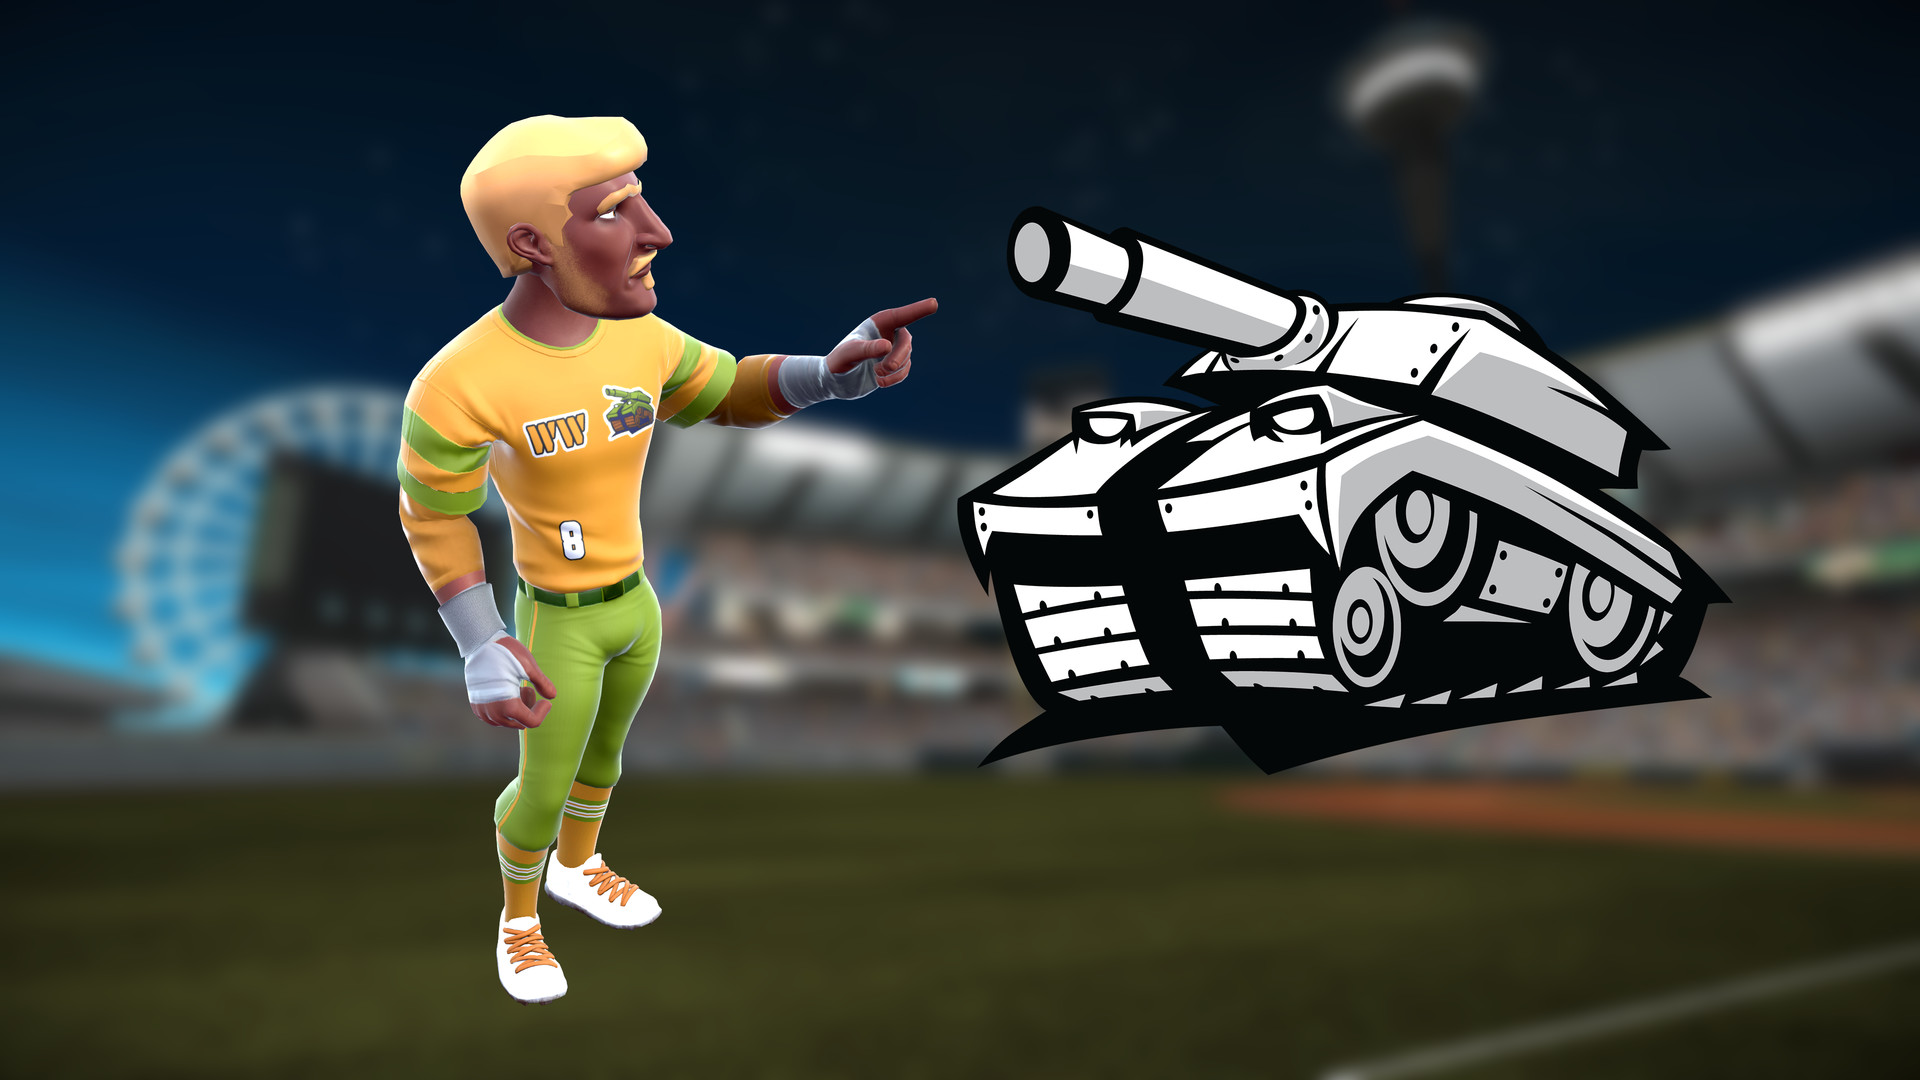 Super Mega Baseball 2 - Fierce Team Customization Pack Featured Screenshot #1